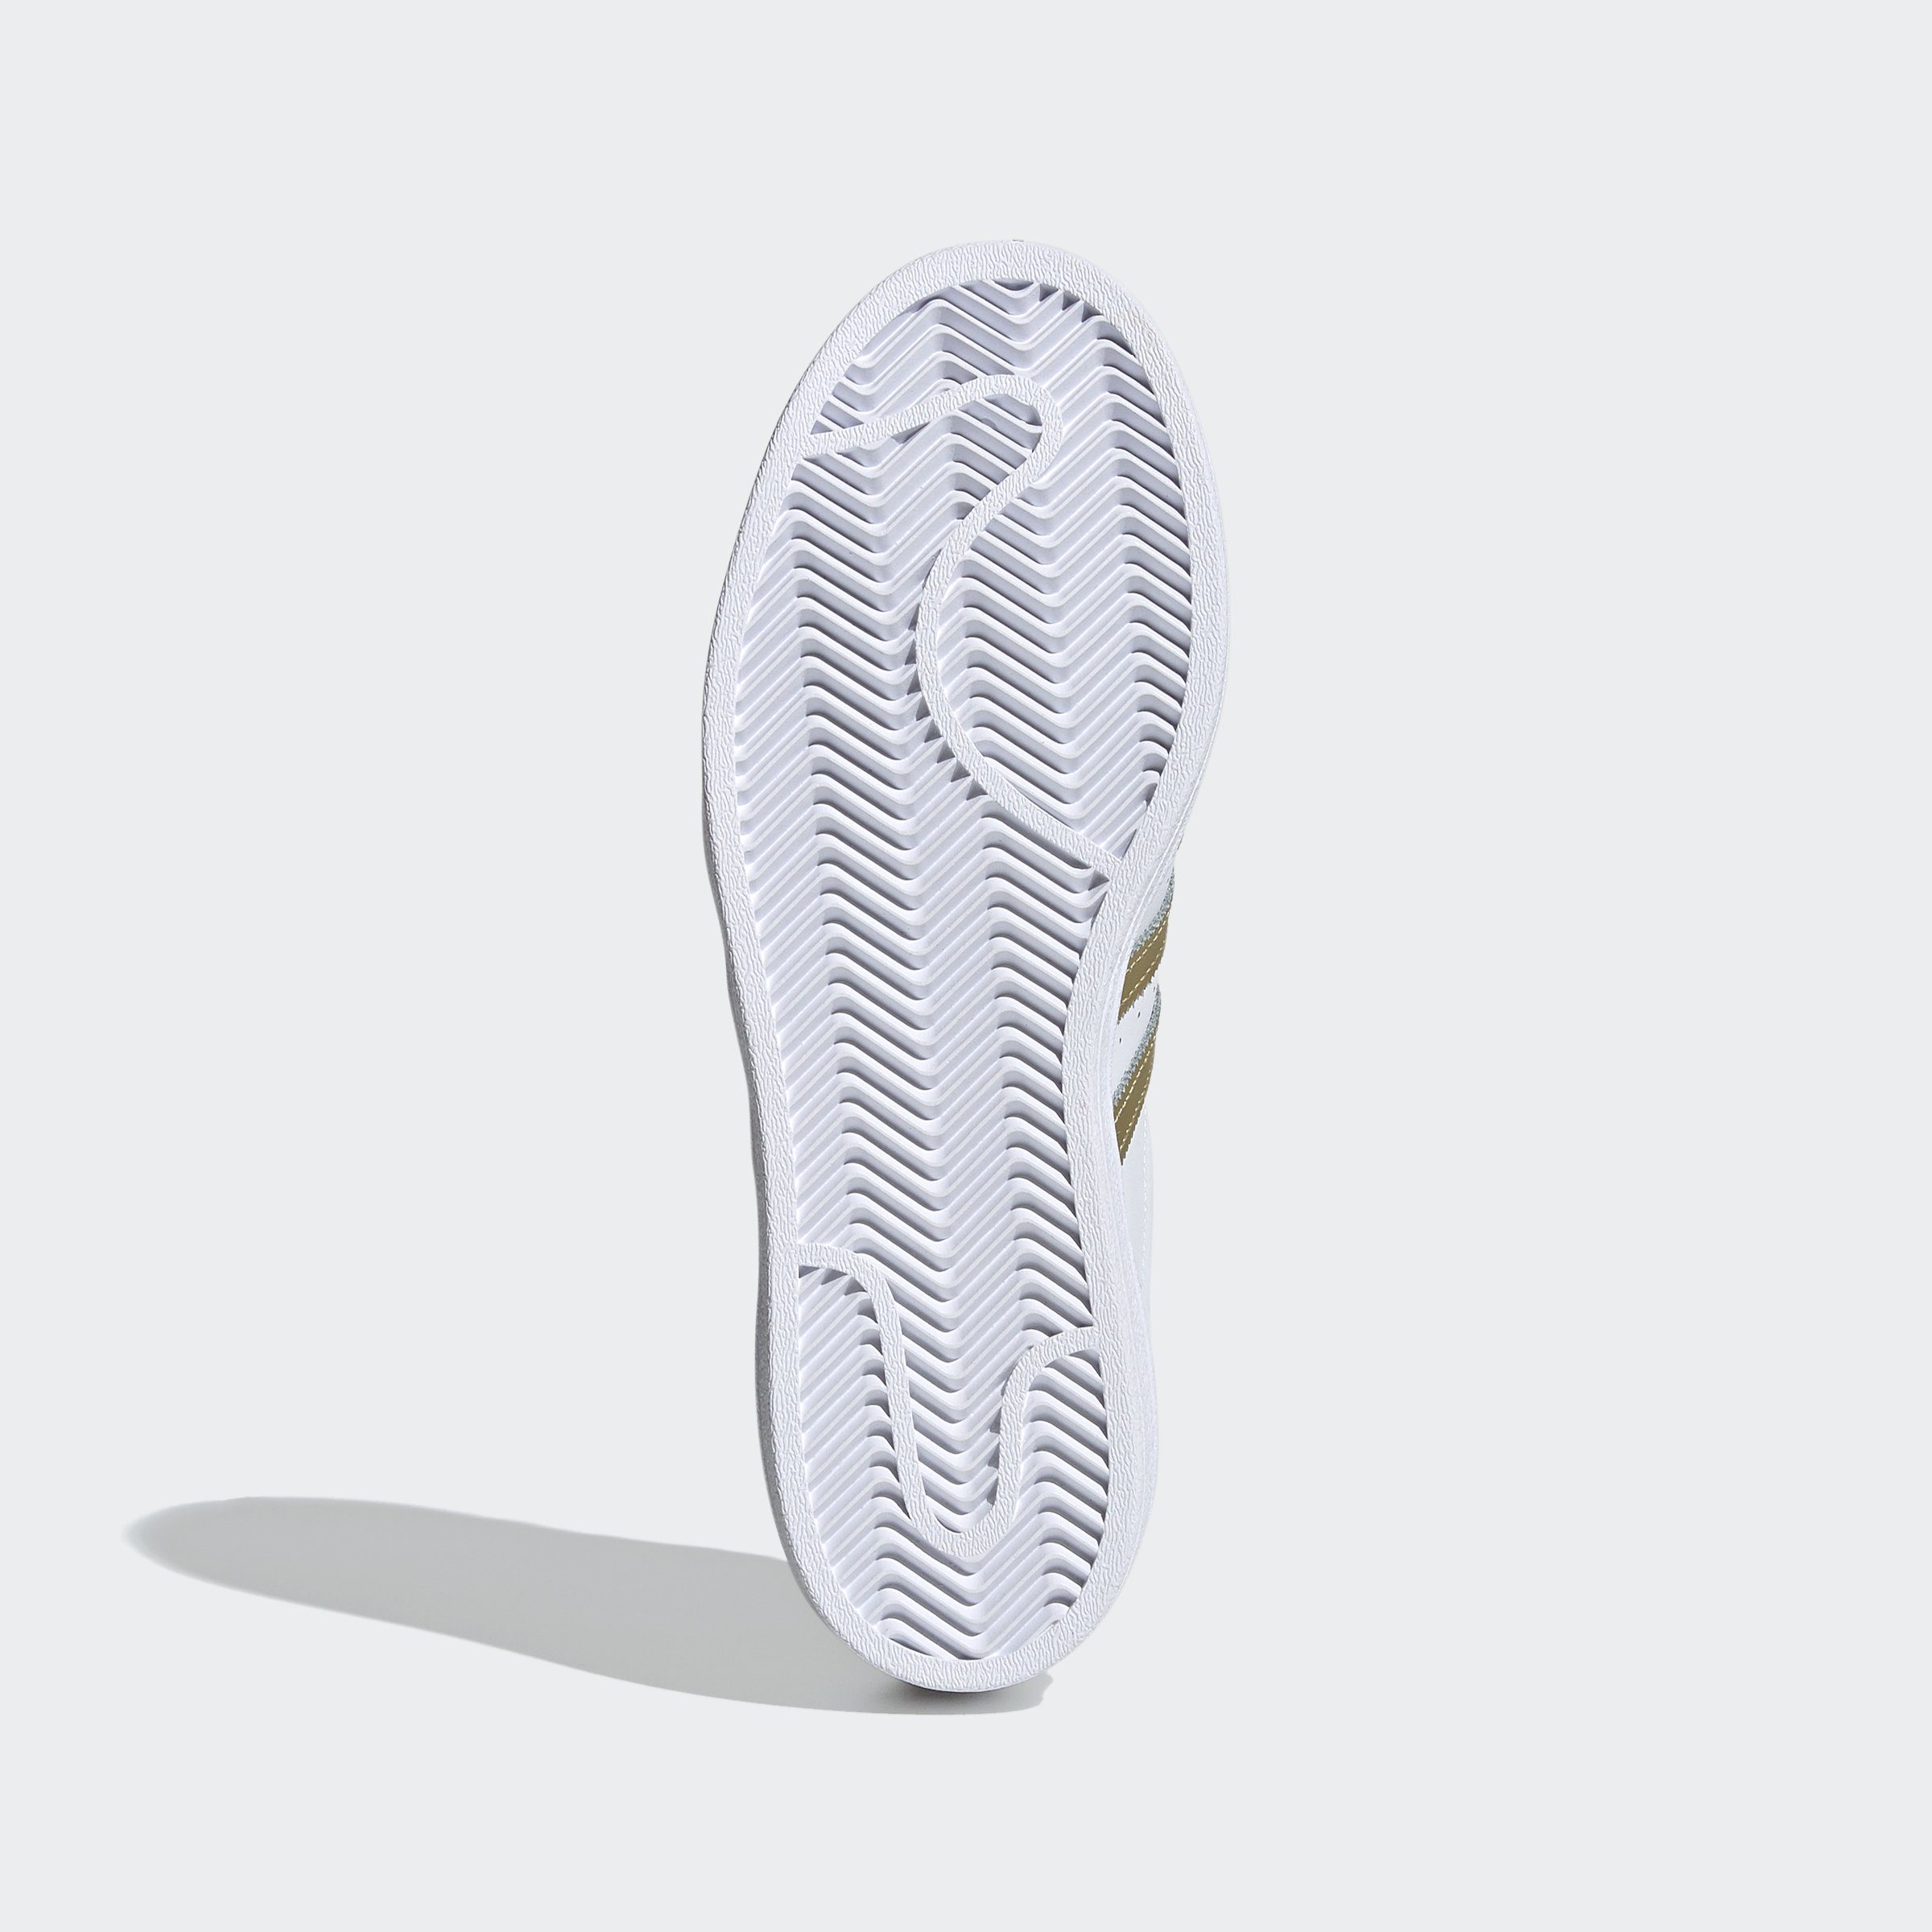 Sneaker Originals White Gold / adidas White Metallic Cloud / SUPERSTAR Cloud